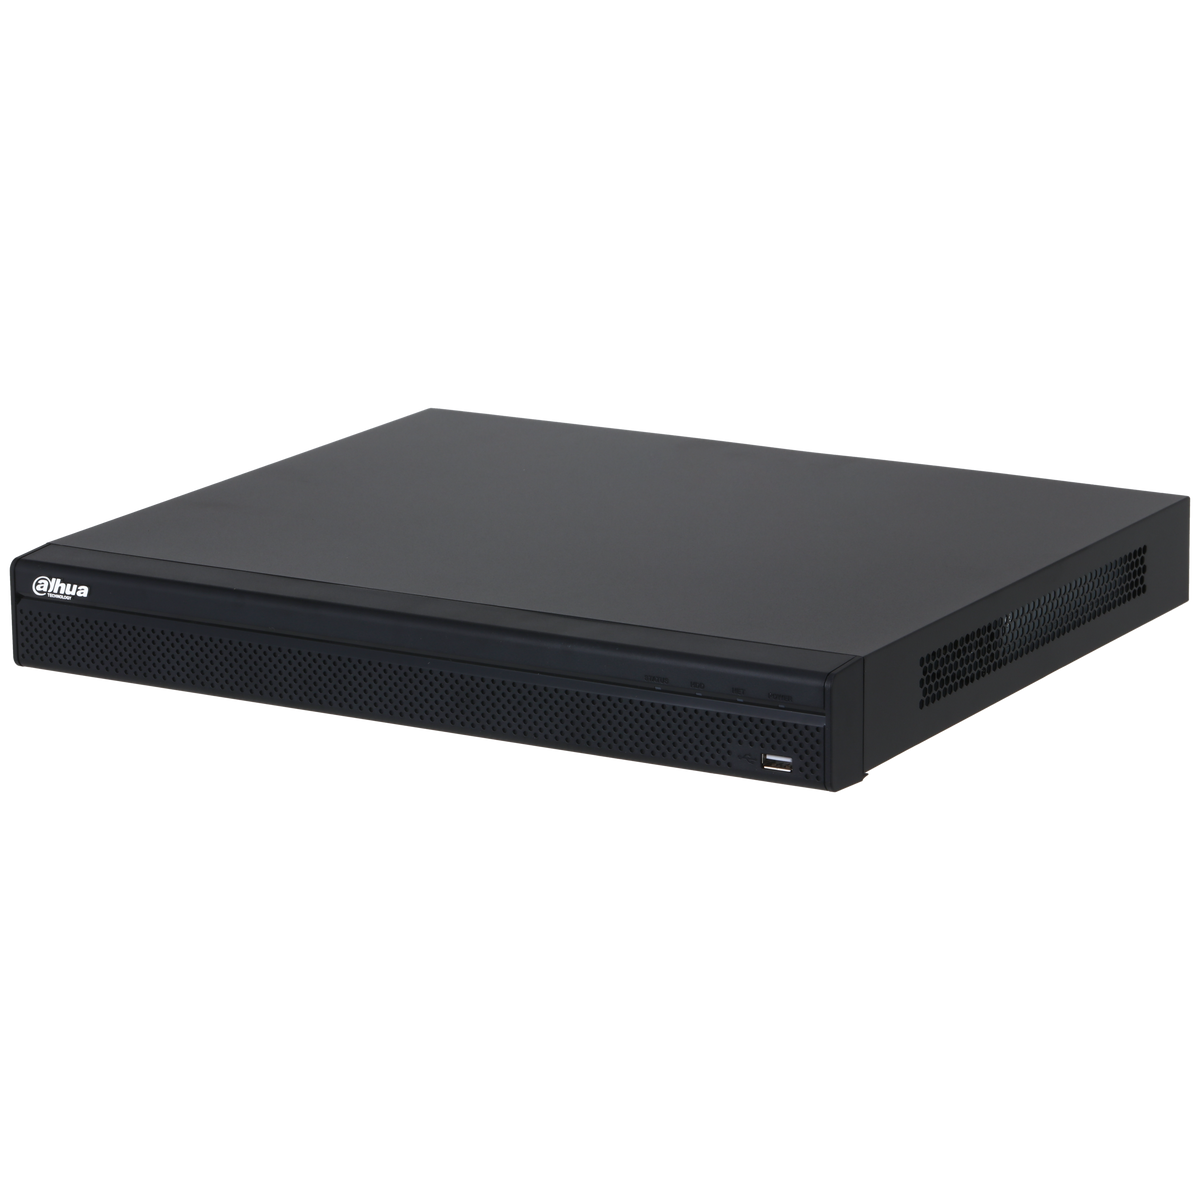 DAHUA NVR2216-16P-4KS3 16CH 1U 16PoE 2HDDs Lite Network Video Recorder